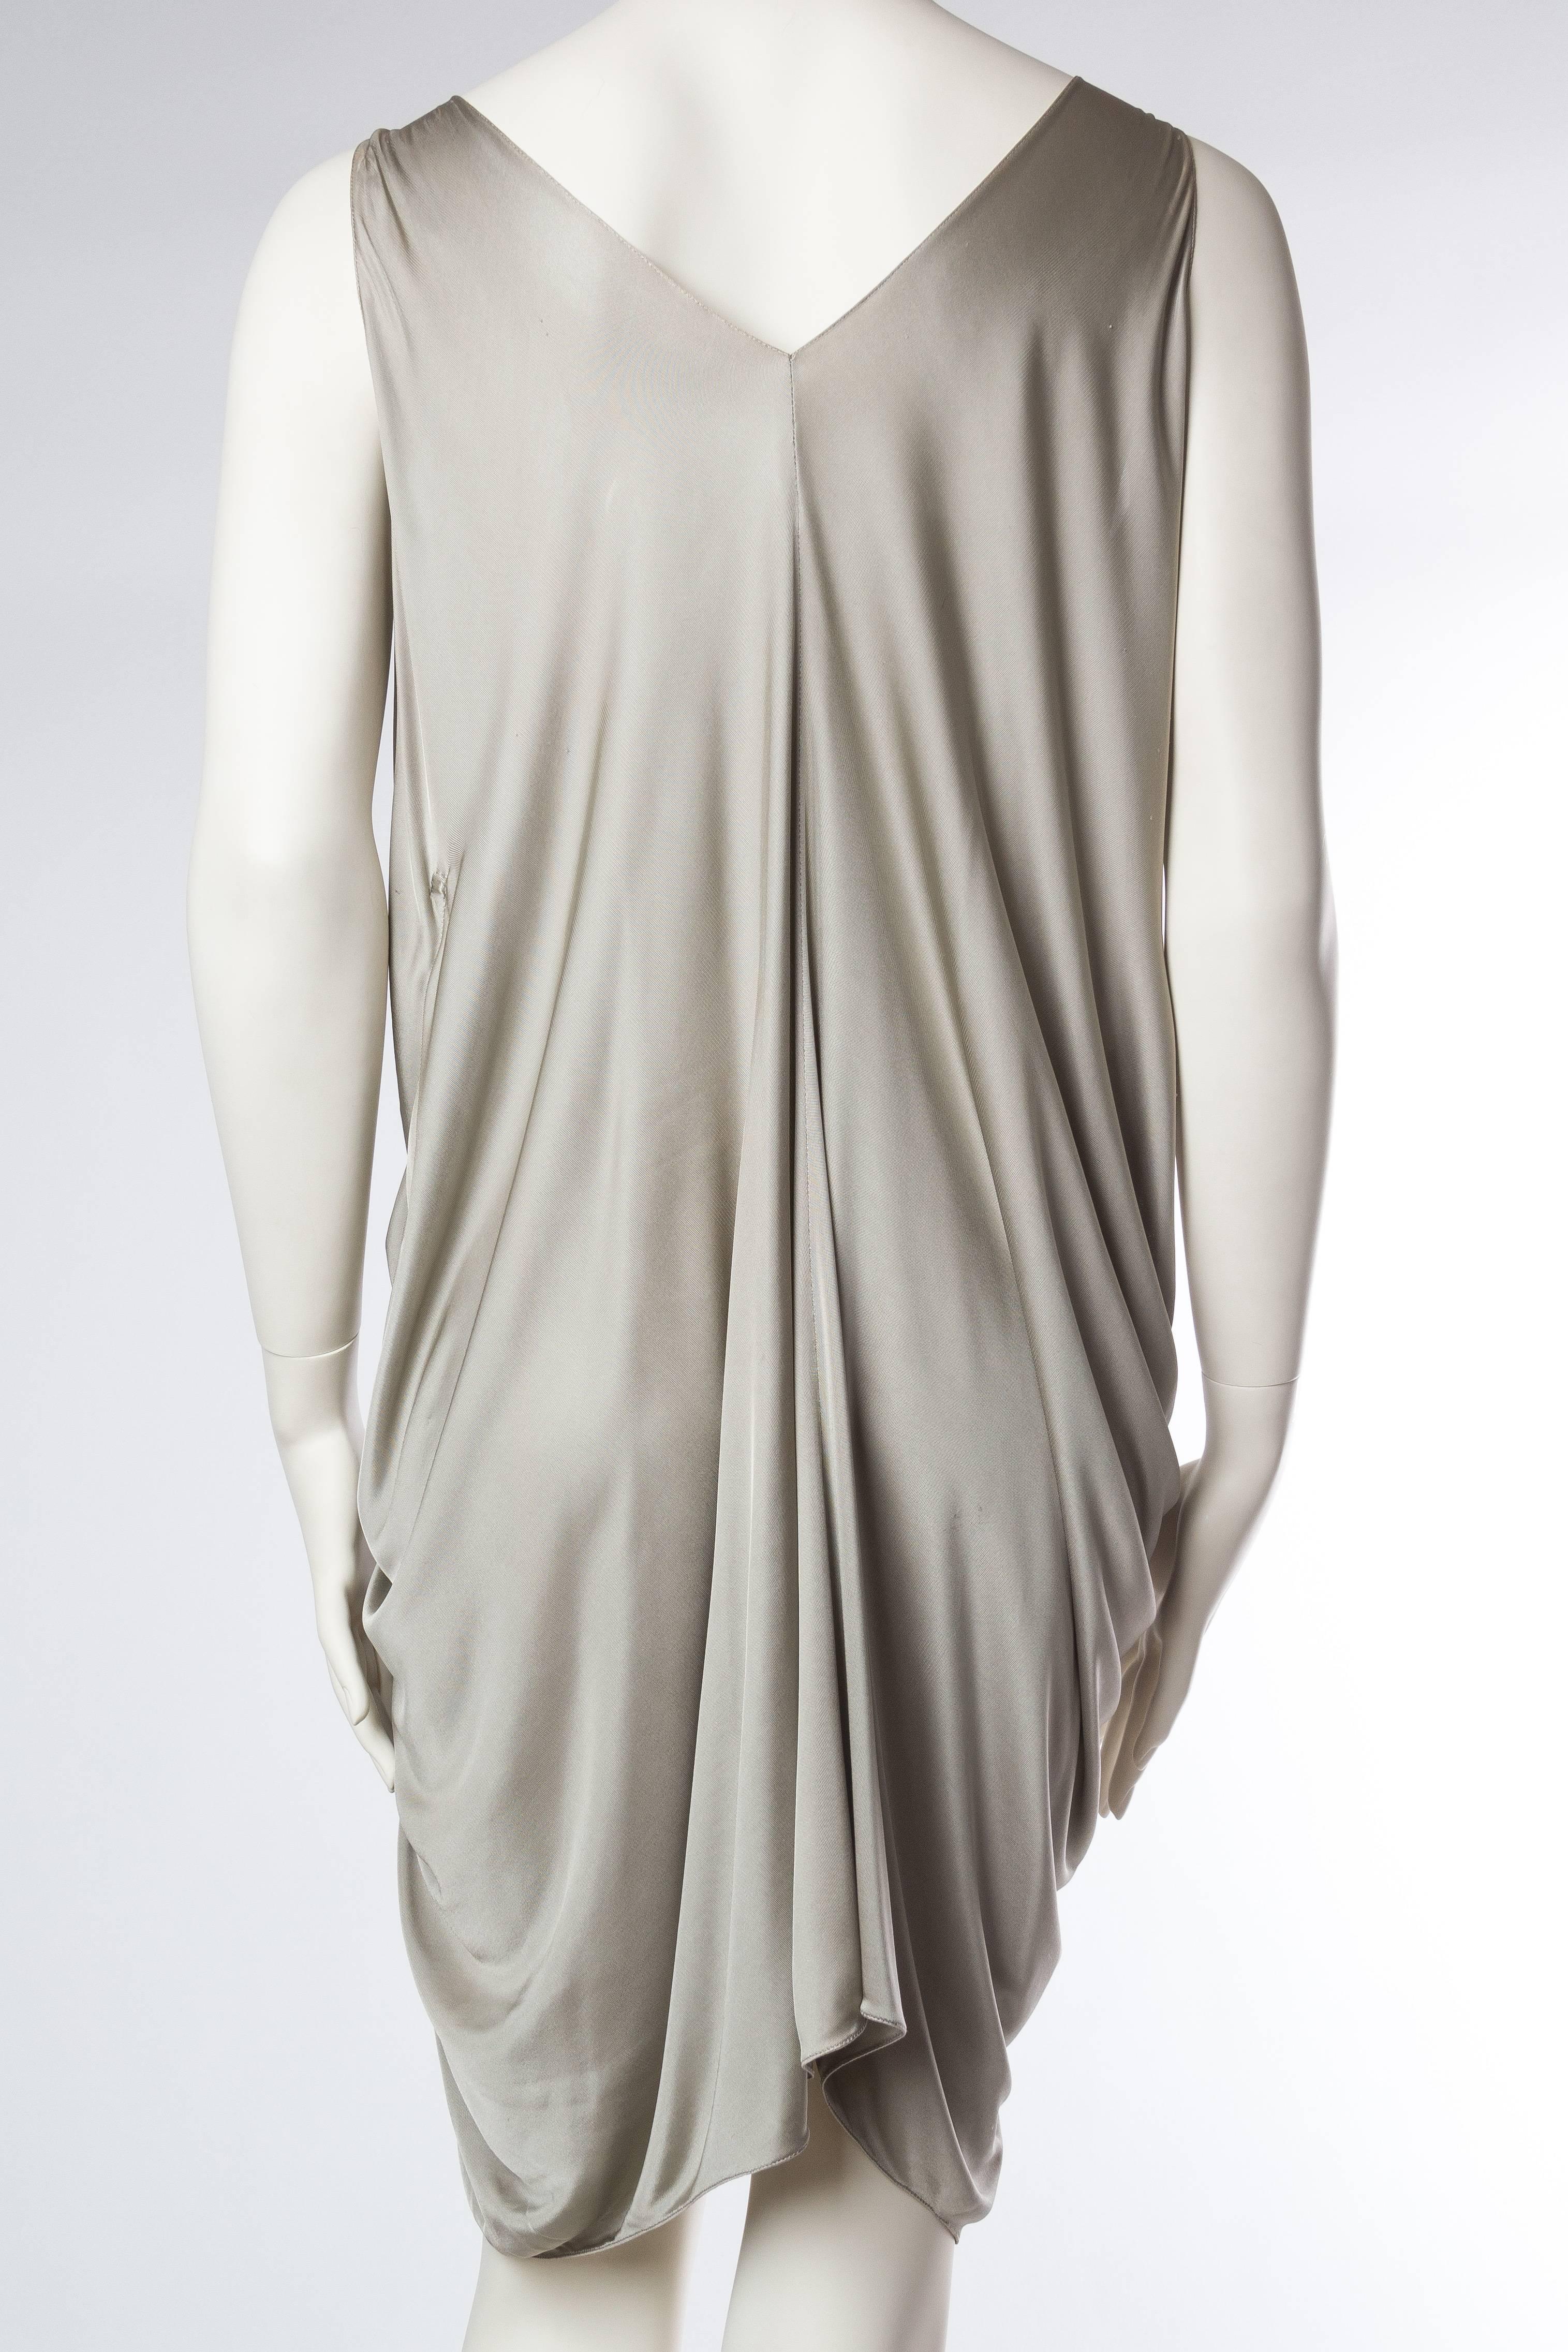 Women's Christian Dior Slinky Jersey Dress